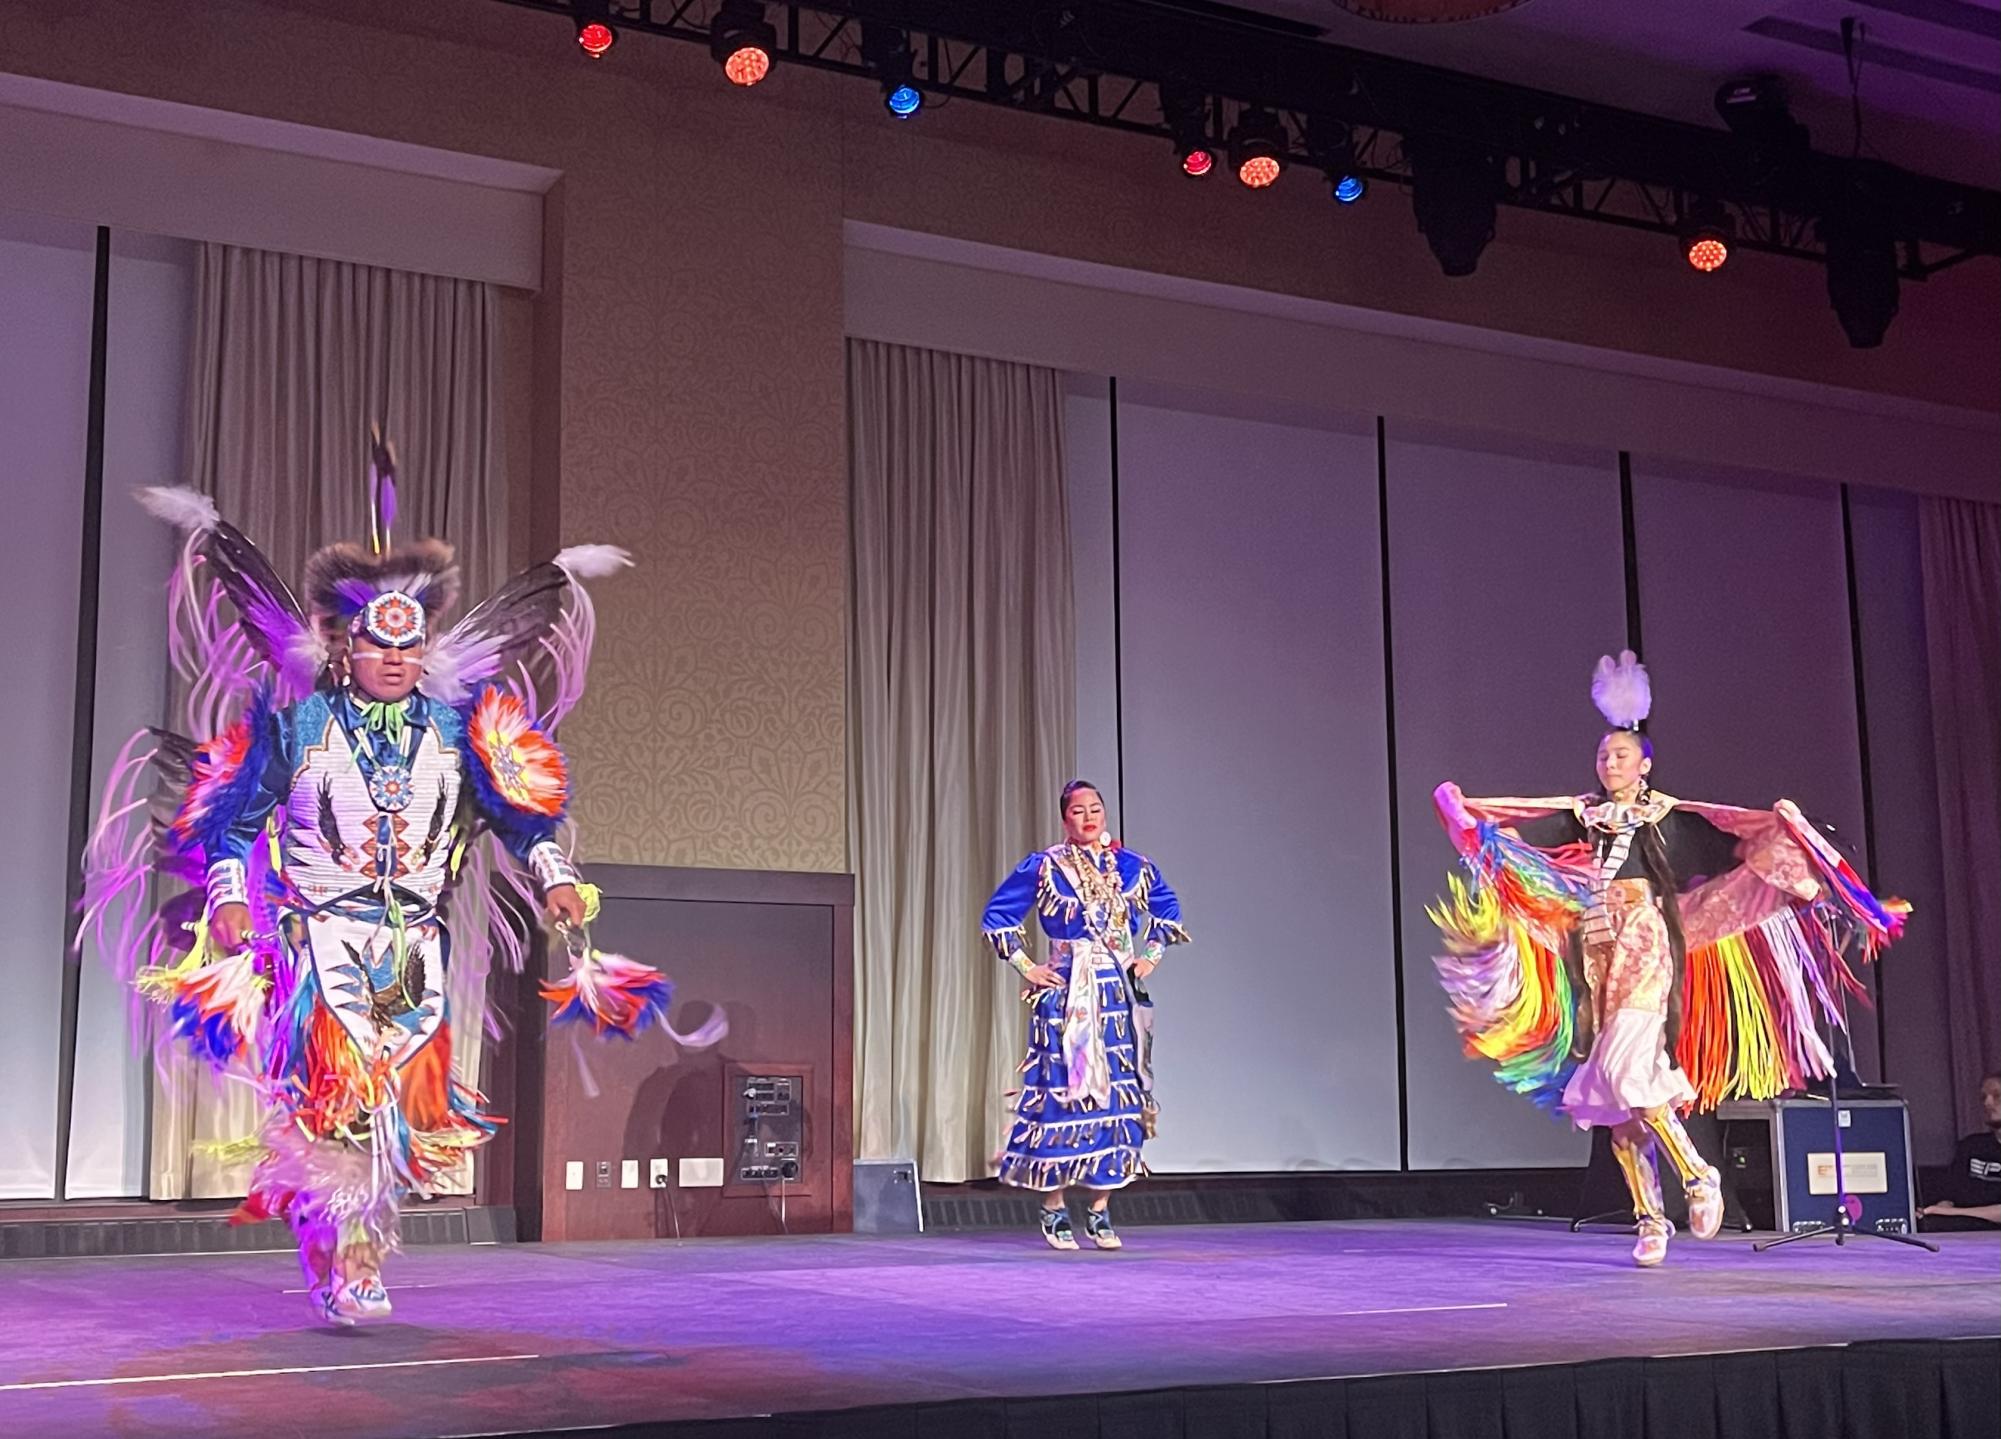 The Native Pride Dancers begin their performance as a trio, showcasing each of their unique dances and regalia.